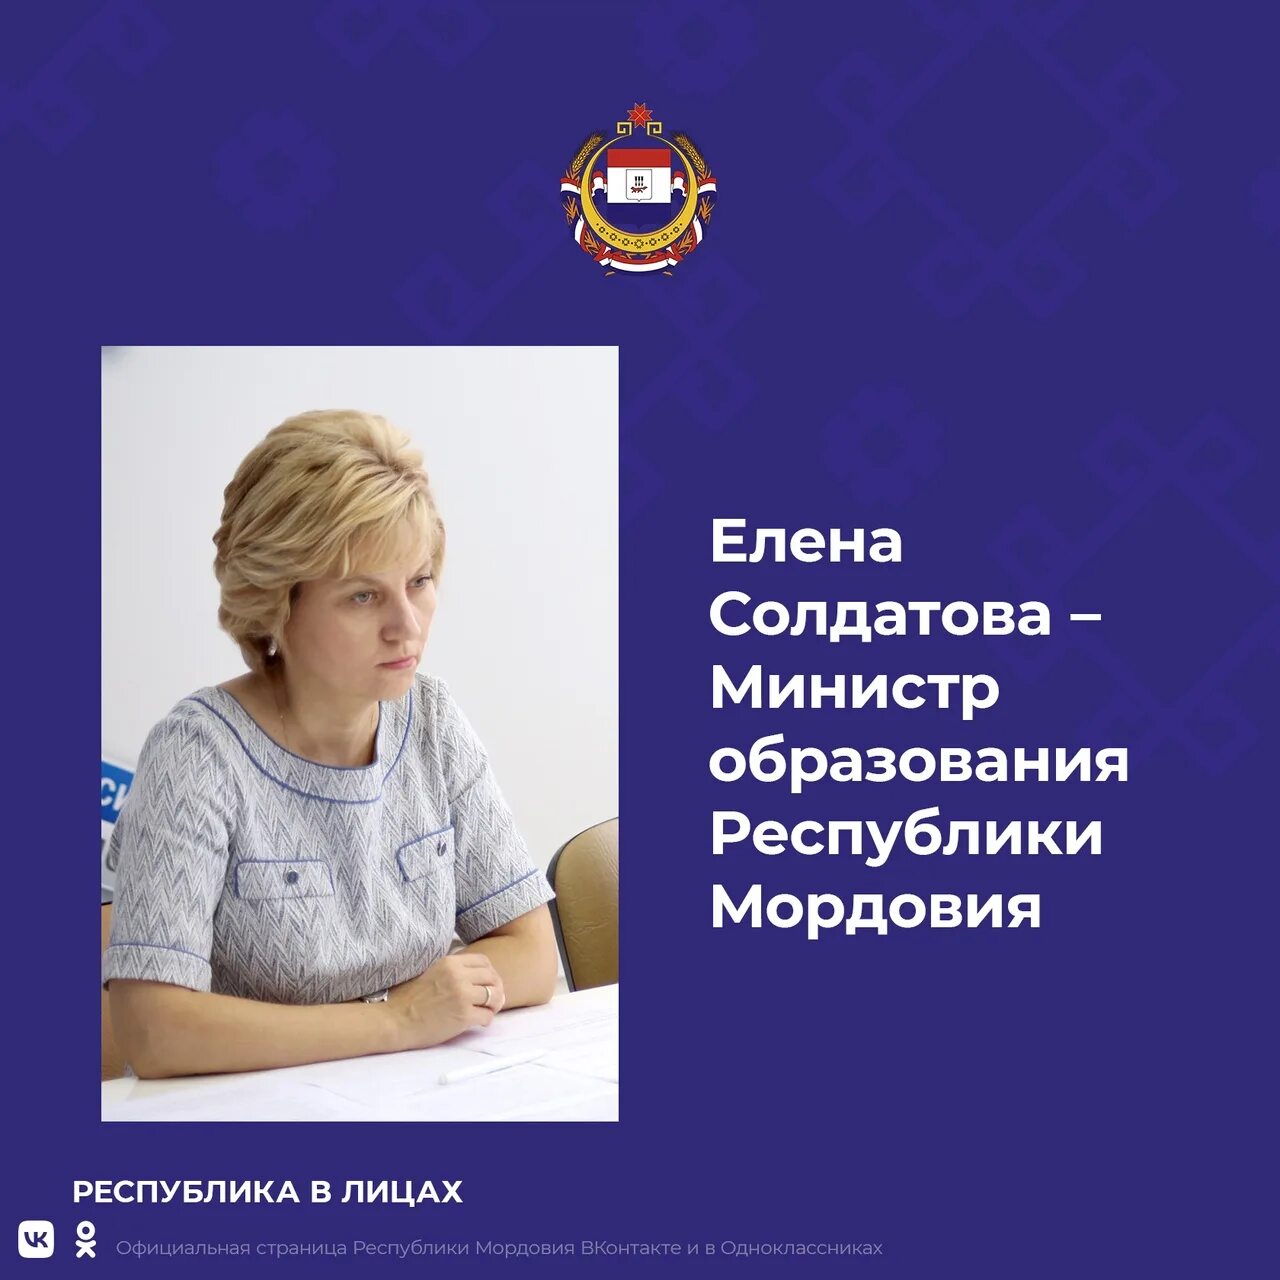 Сайт образование мордовия. Министр образования Республики Мордовия Солдатова.